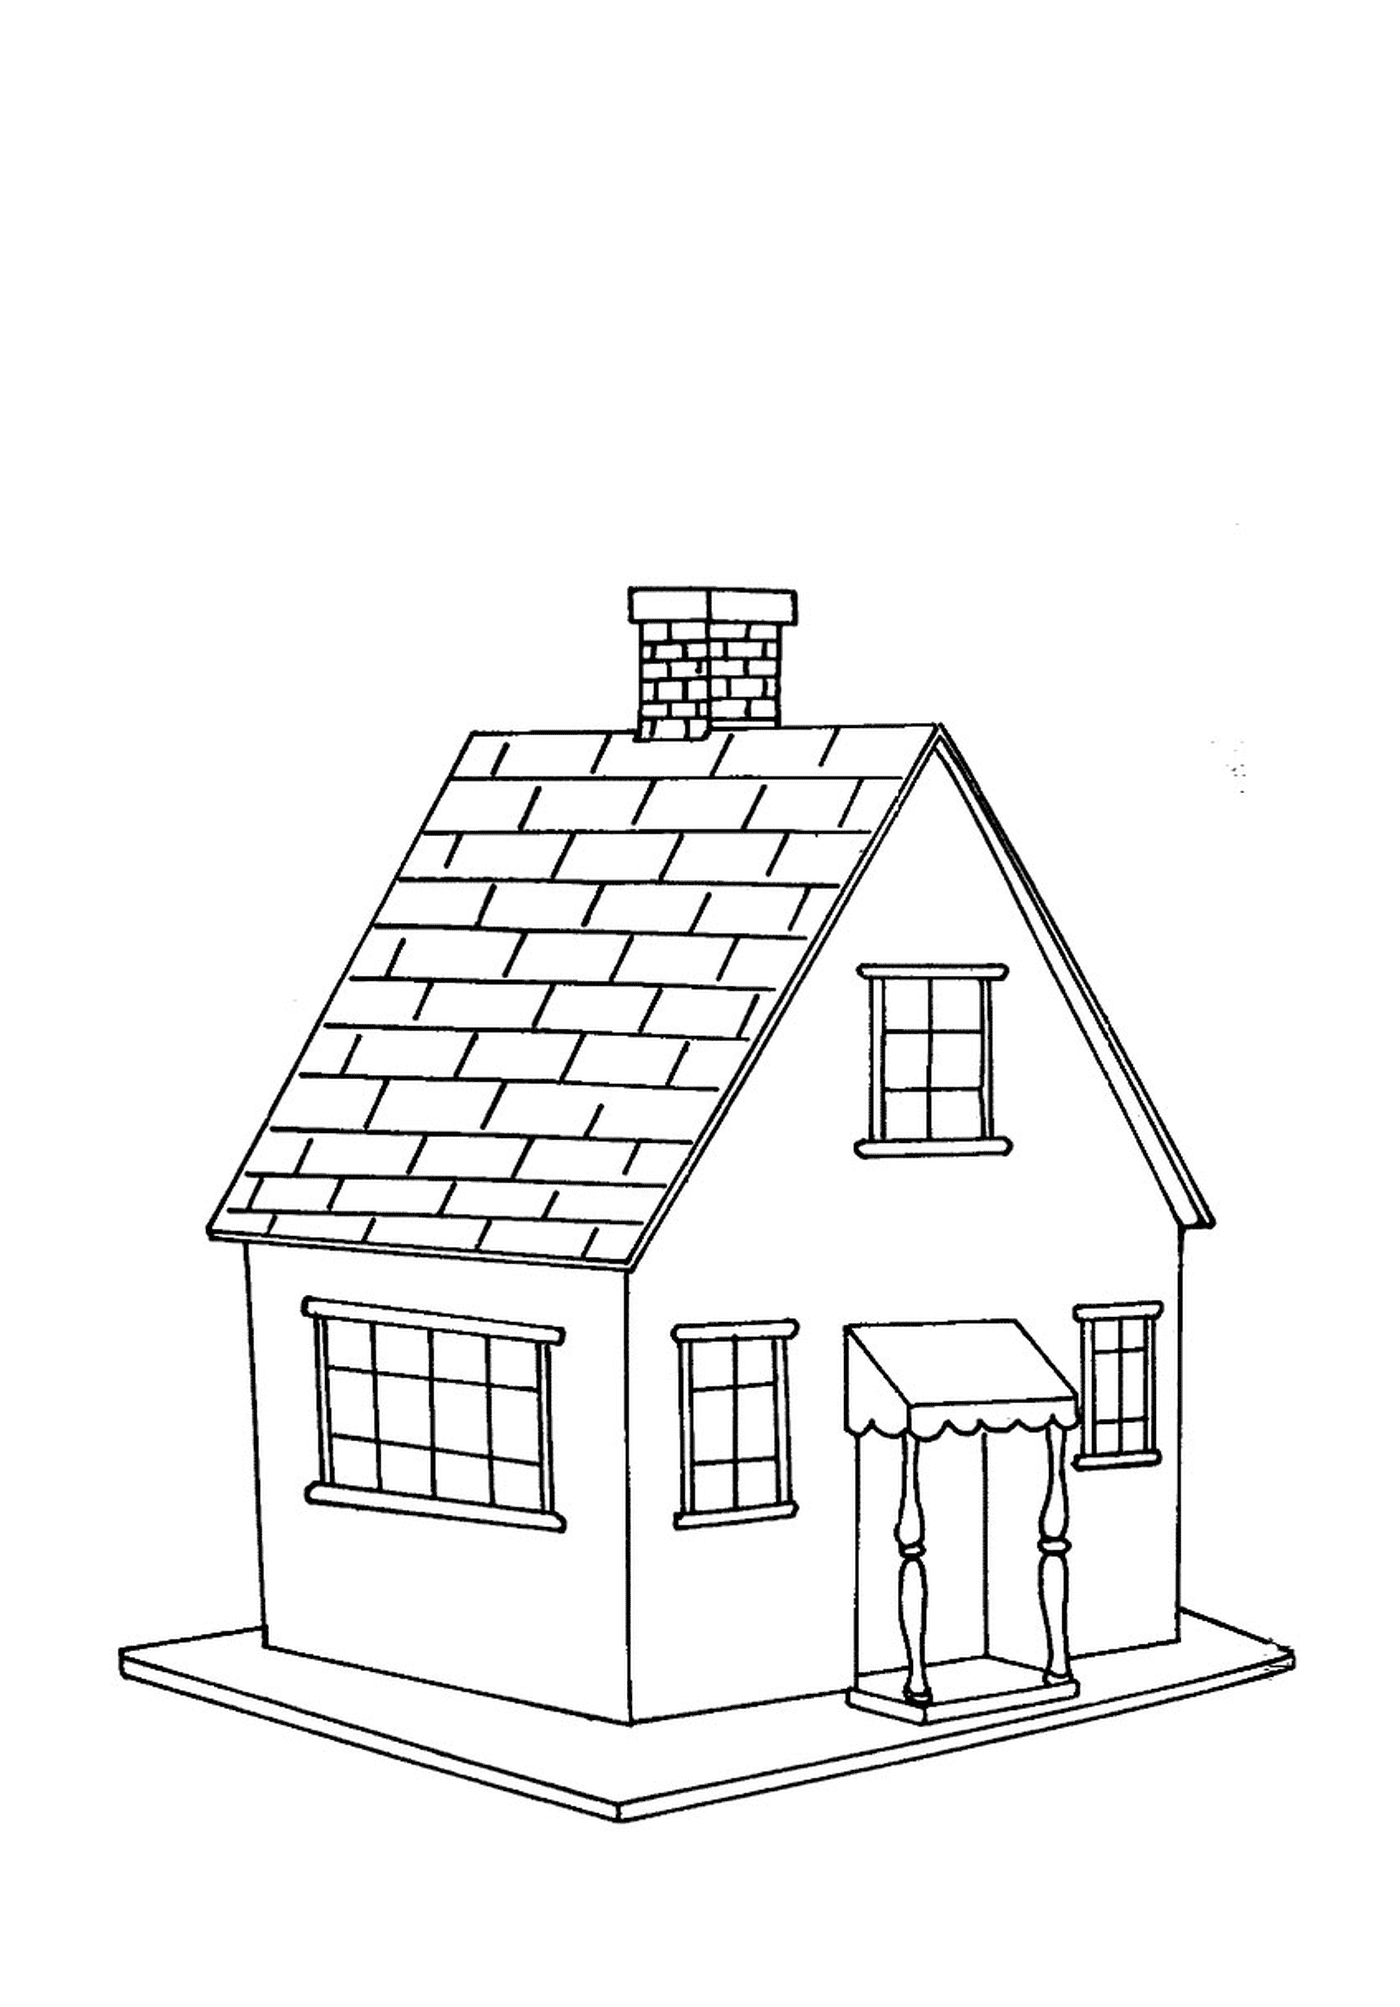  casa classica semplice caldo 